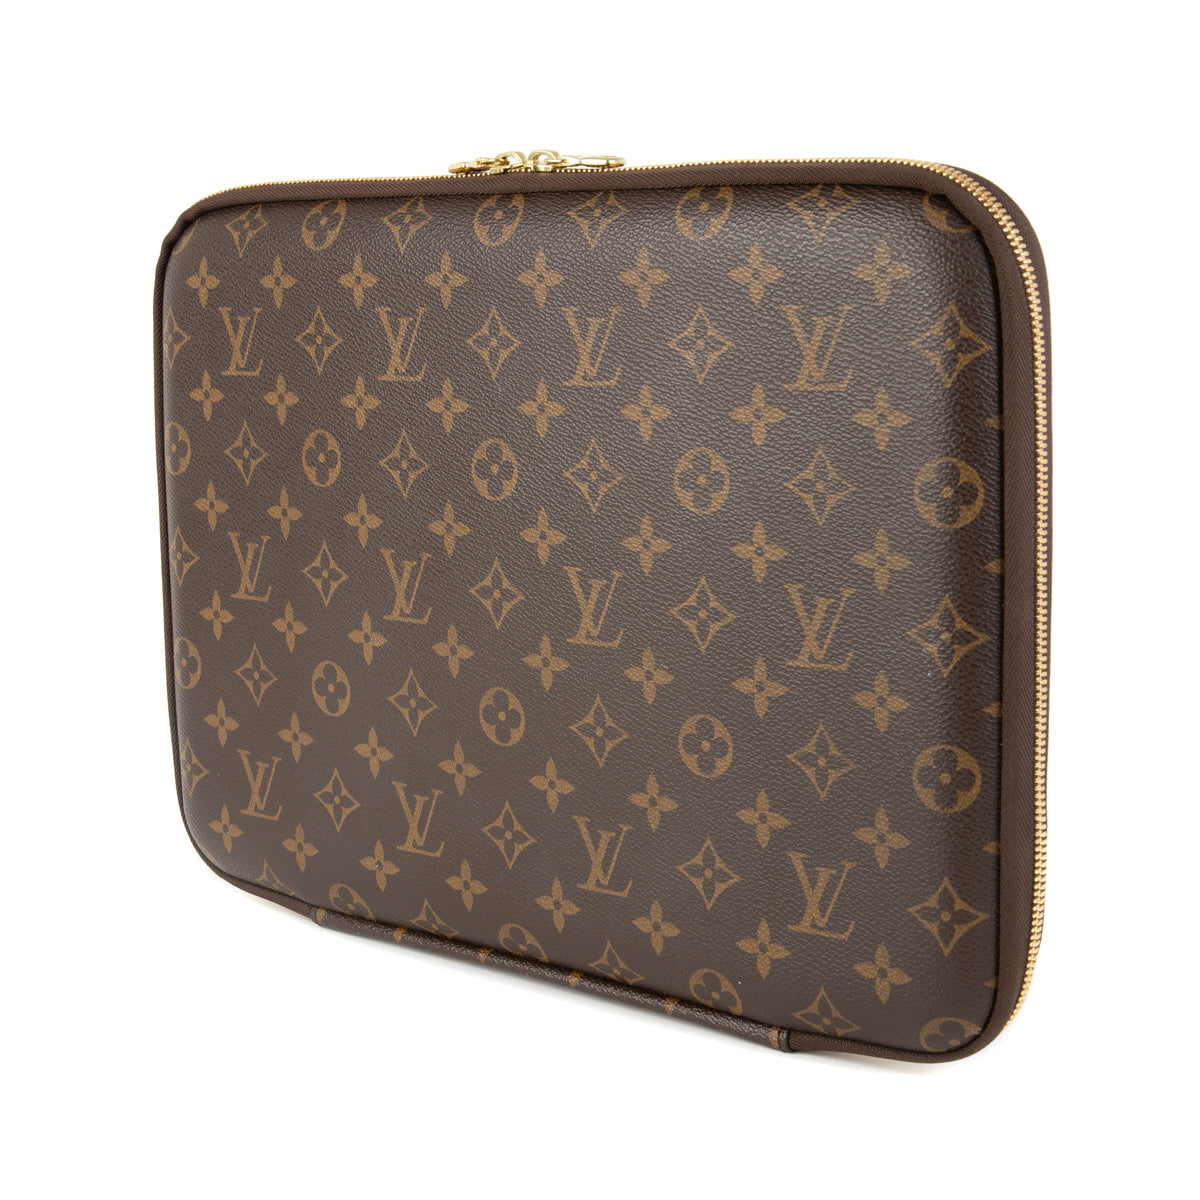 BEST LV LAPTOP BAGS Louis Vuitton purses that fit a 15 MacBook Pro   Anastasiya Bagaholic  YouTube